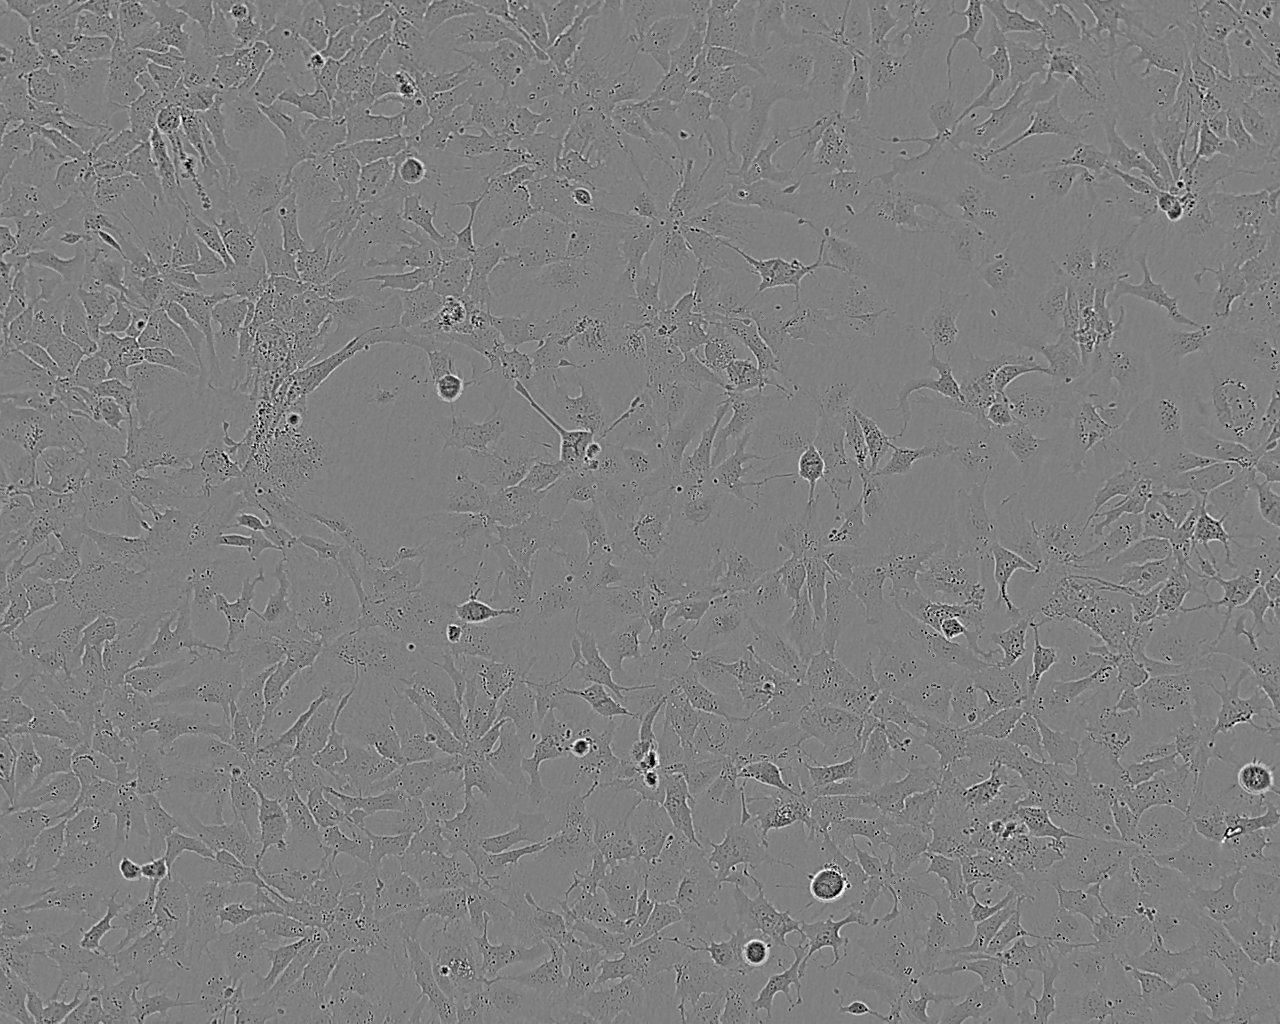 MUG-Chor1 Cell:人骶骨脊索瘤细胞系,MUG-Chor1 Cell